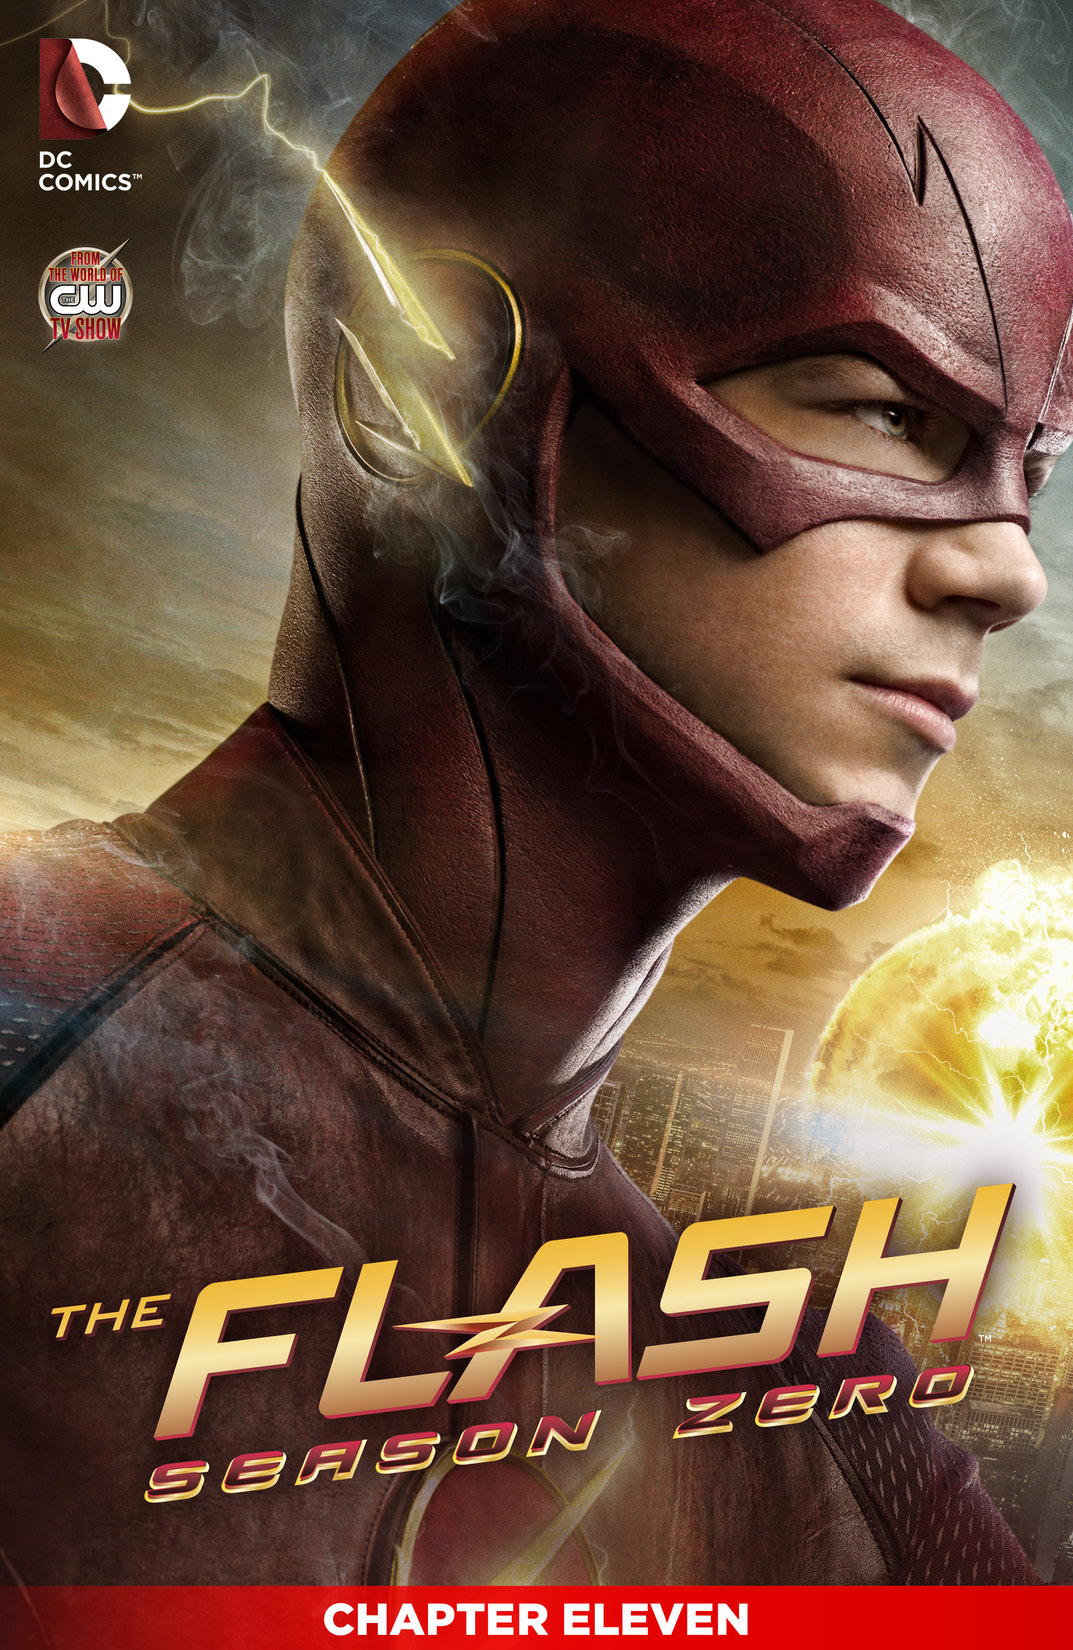 The Flash: Season Zero #11 preview images